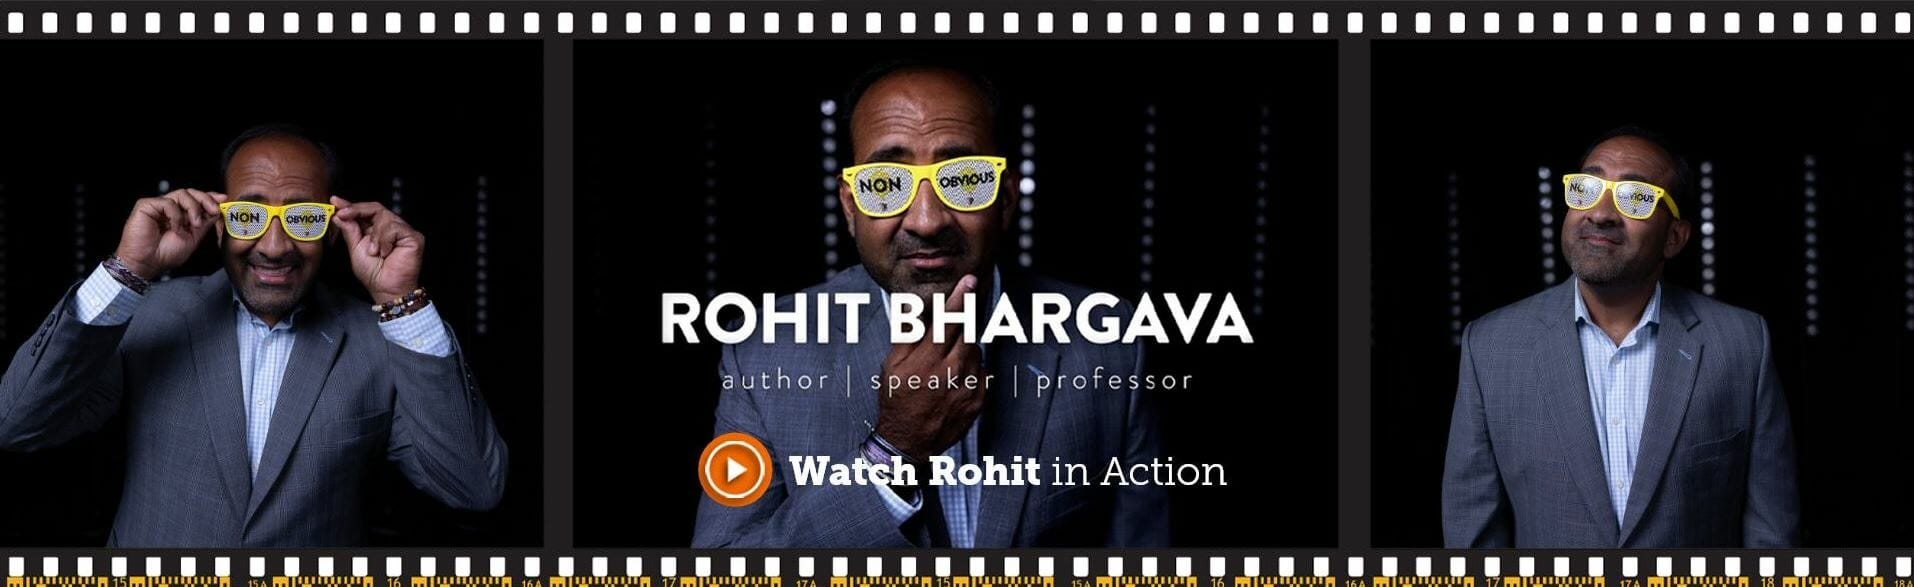 Rohit Bhargava. Watch Rohit in Action